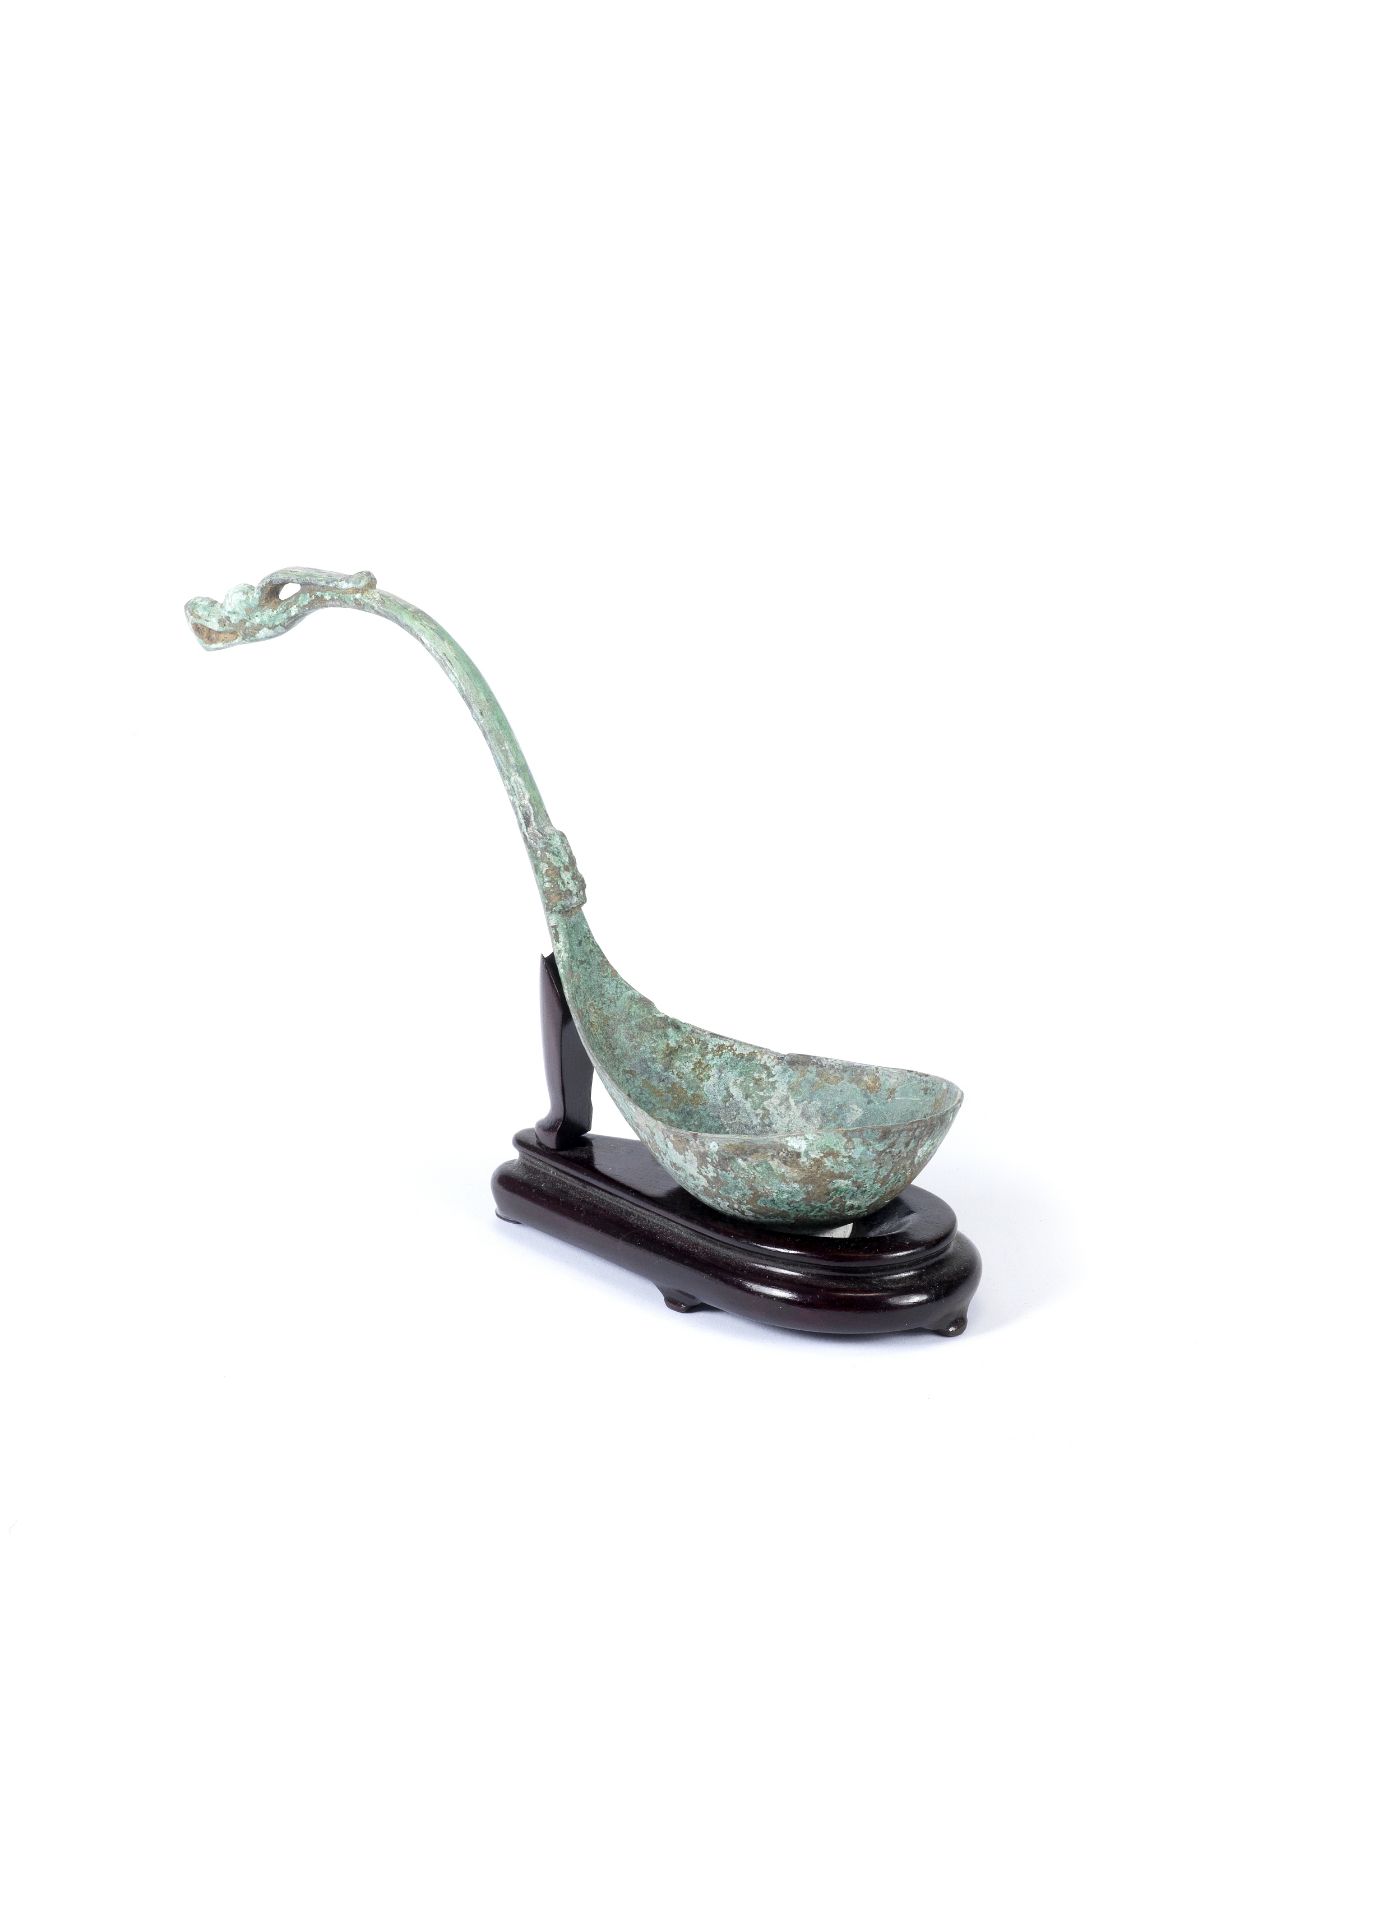 A rare archaic bronze dragon-headed ladle Han Dynasty (2)